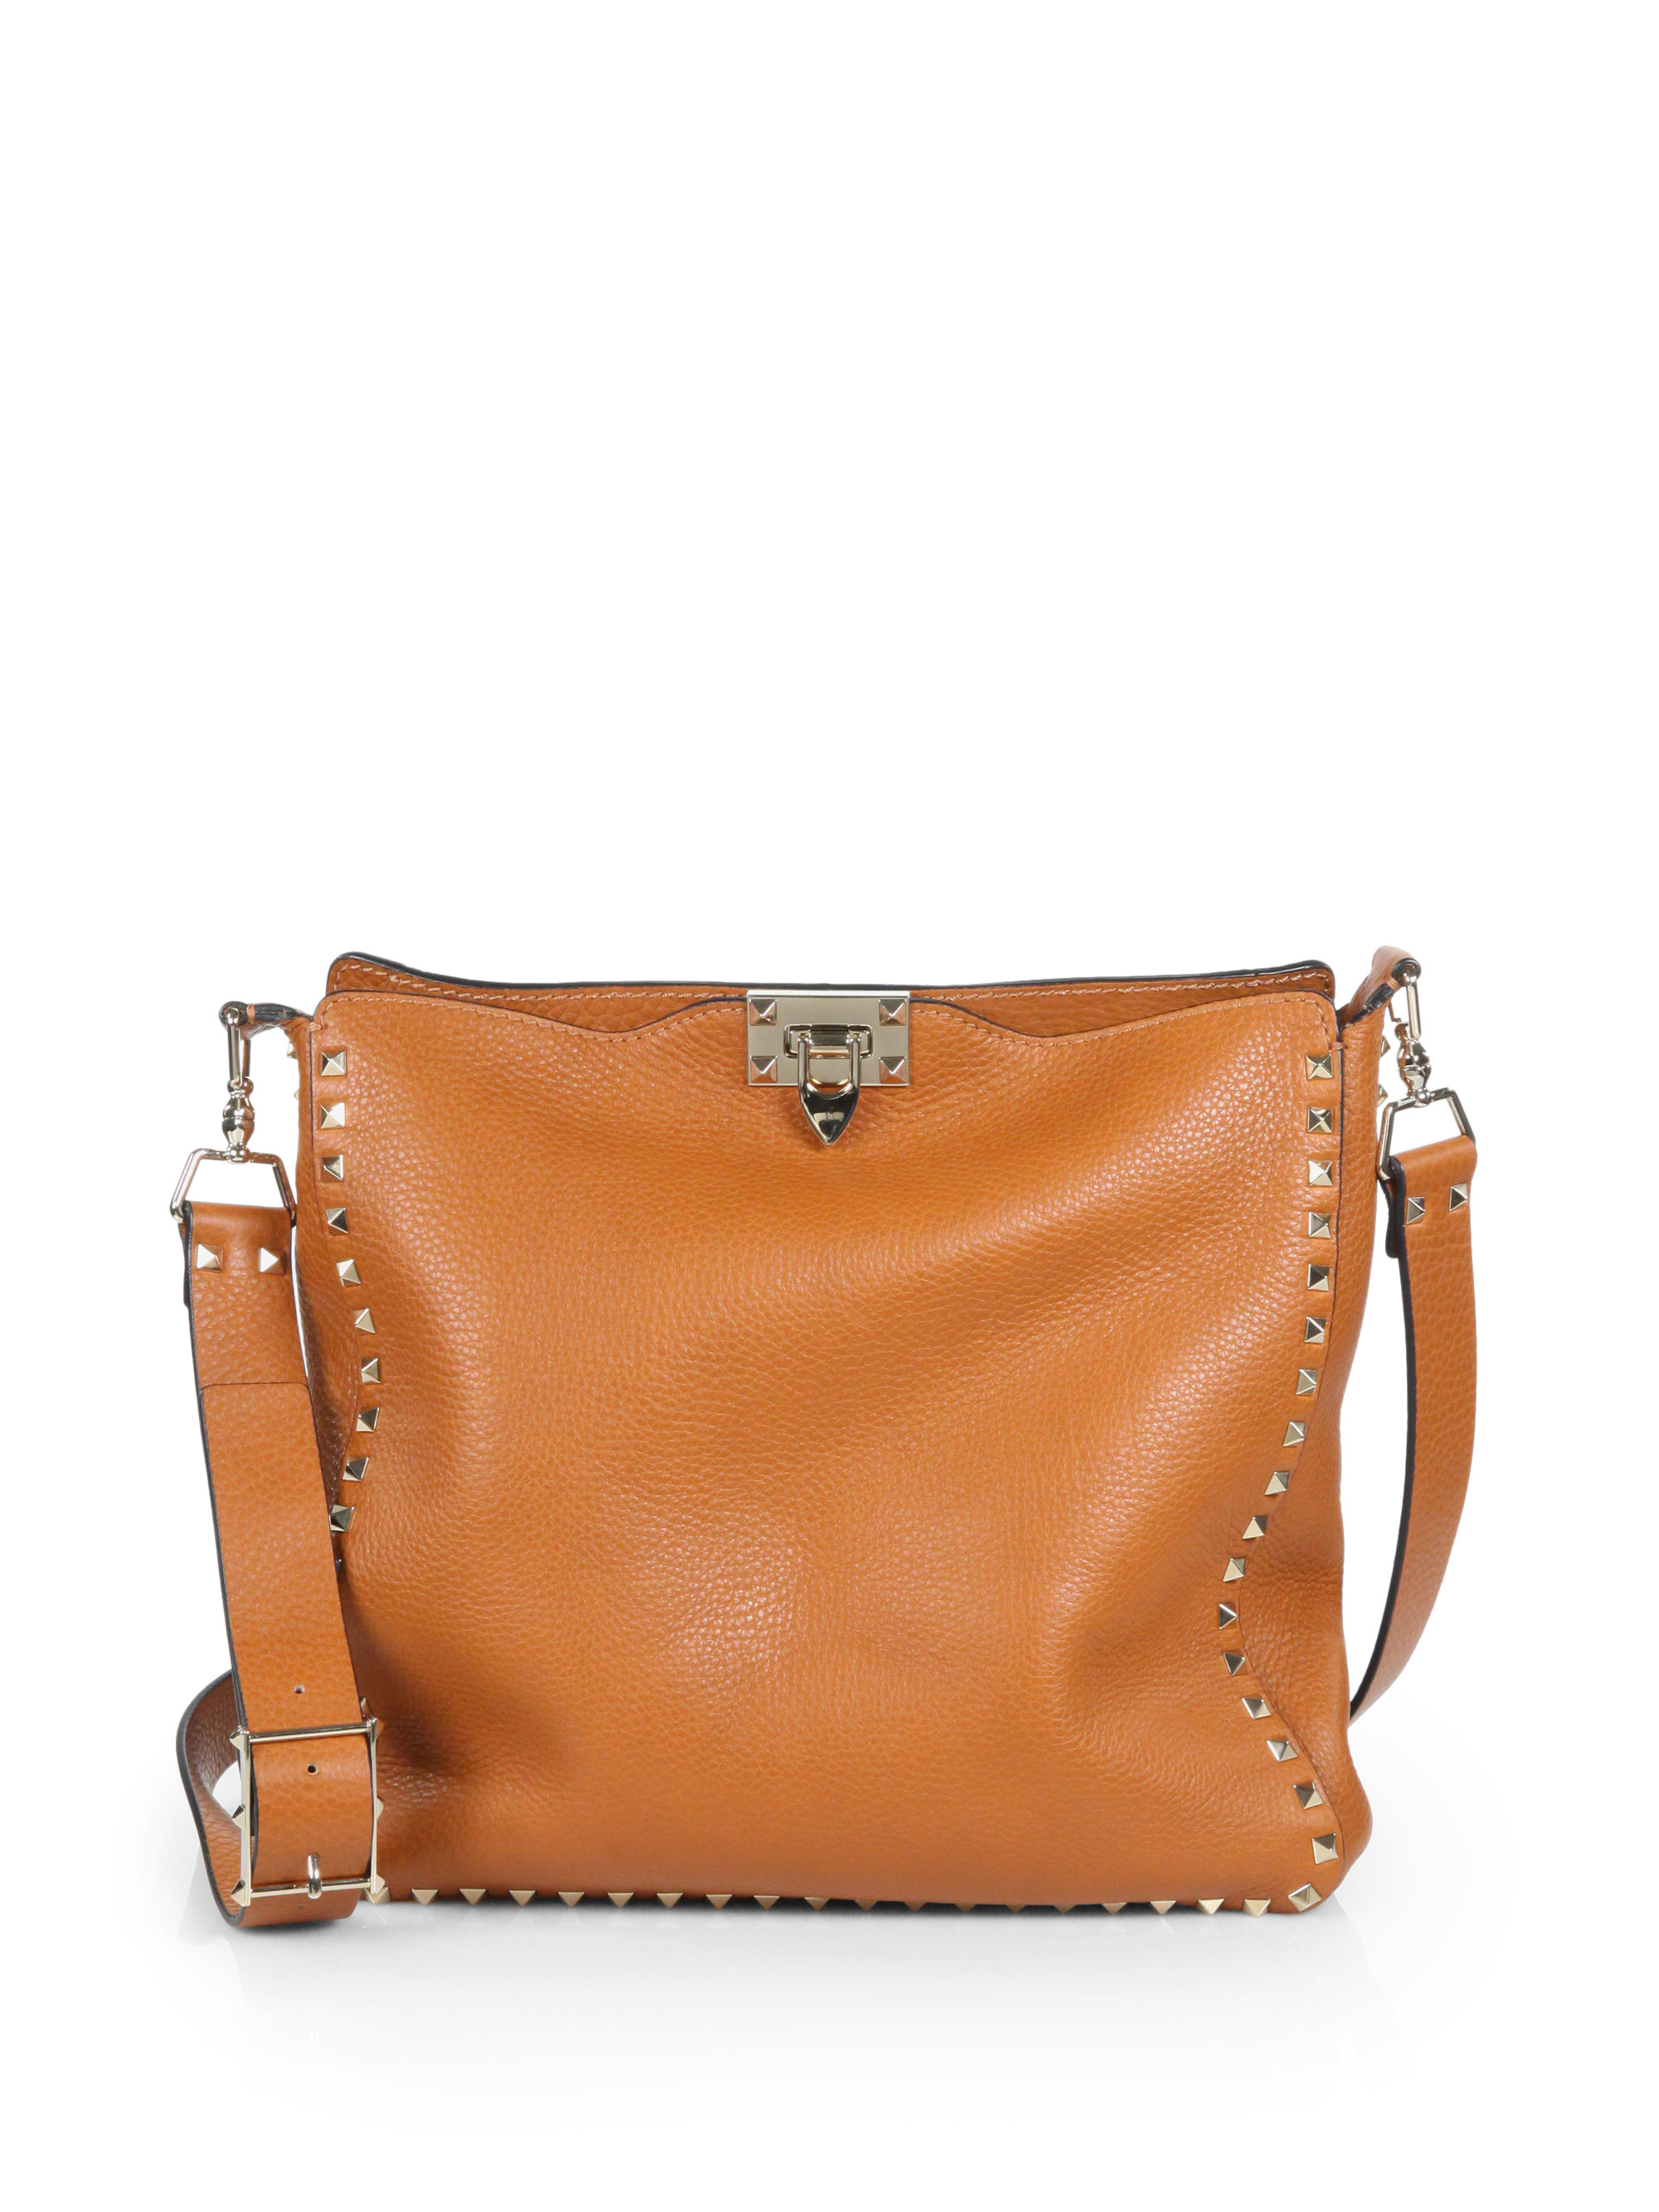 Valentino Rockstud Utilitarian Medium Leather Crossbody Bag in Brown